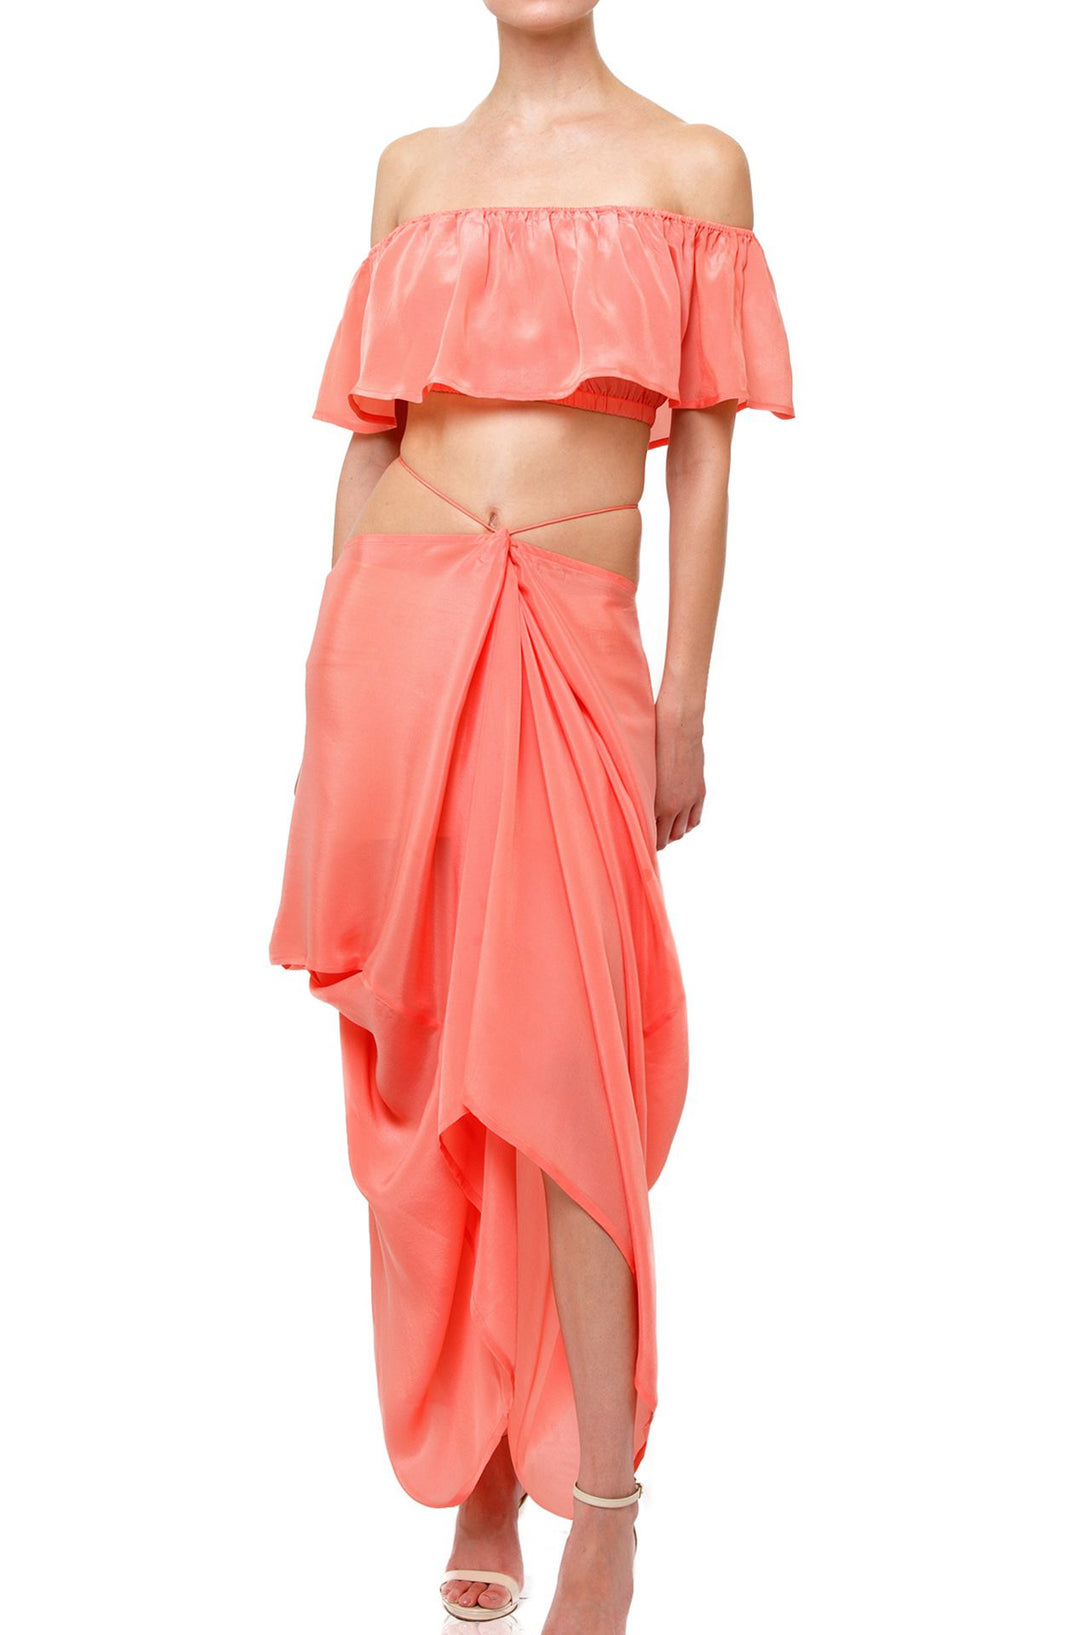  peach color dress, Shahida Parides, silk caftans,short sleeveless summer dresses, cute mini dresses,